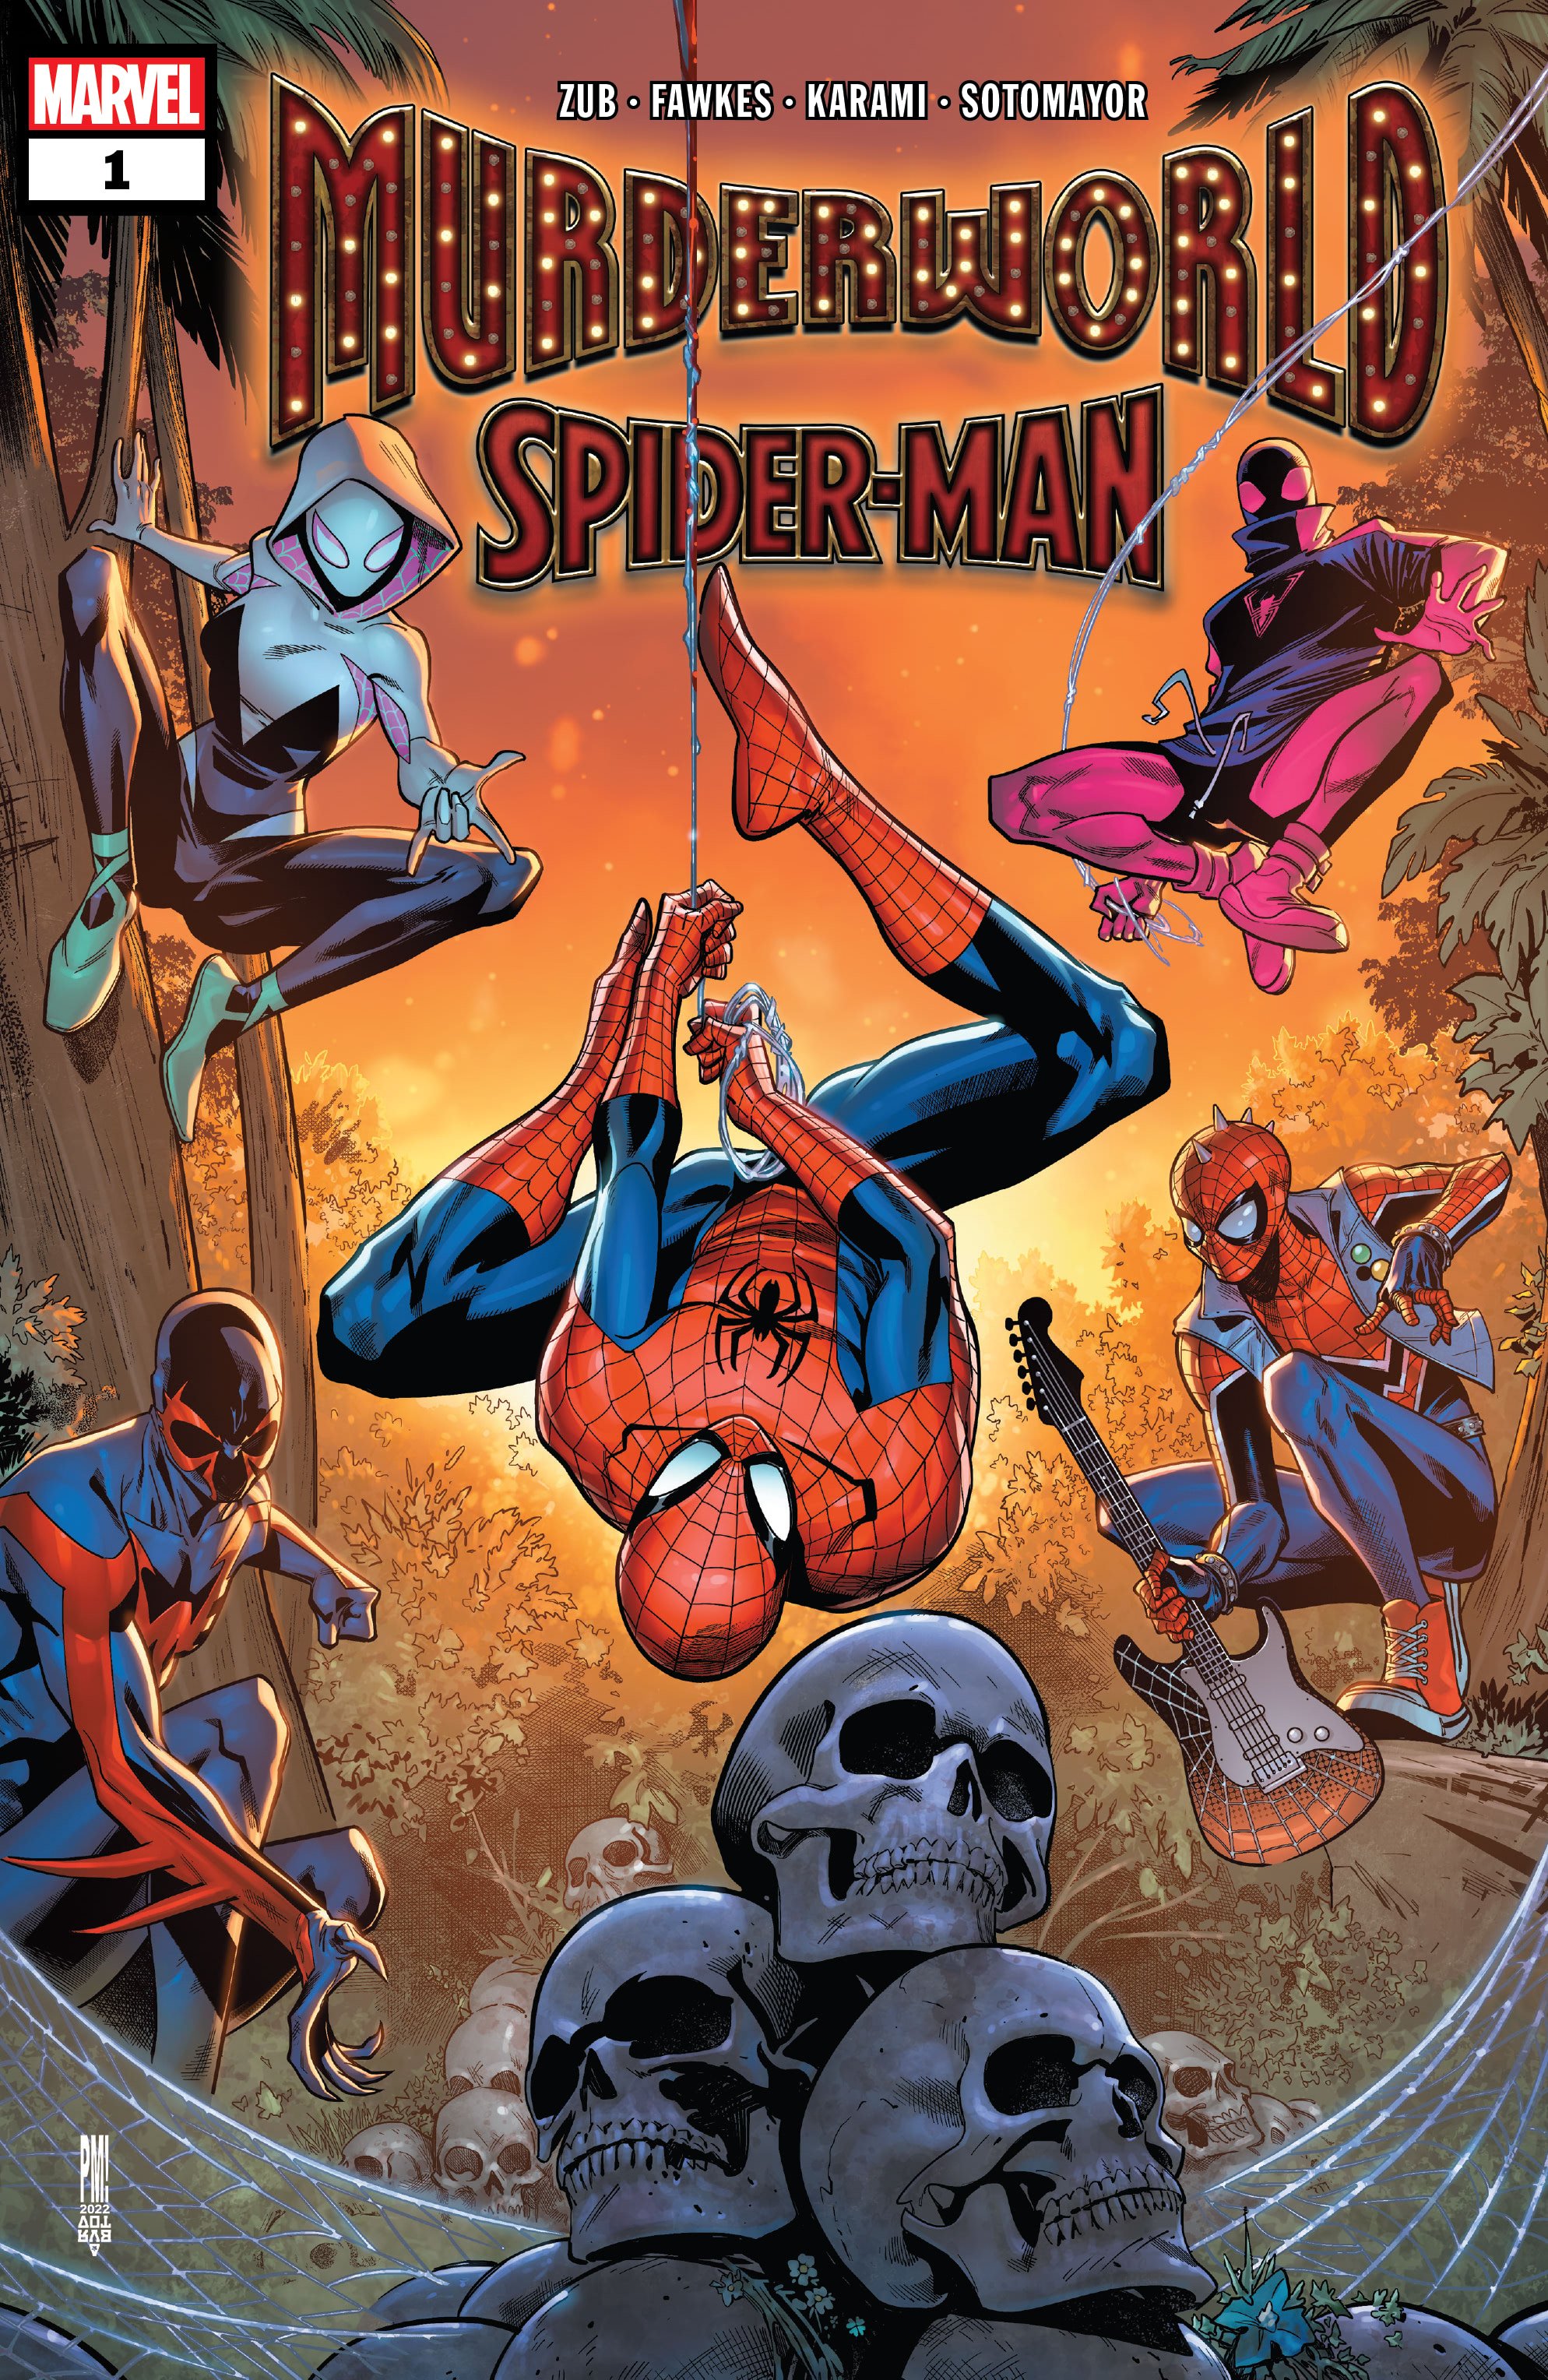 Murderworld - Spider-Man #1 — You Don't Read Comics